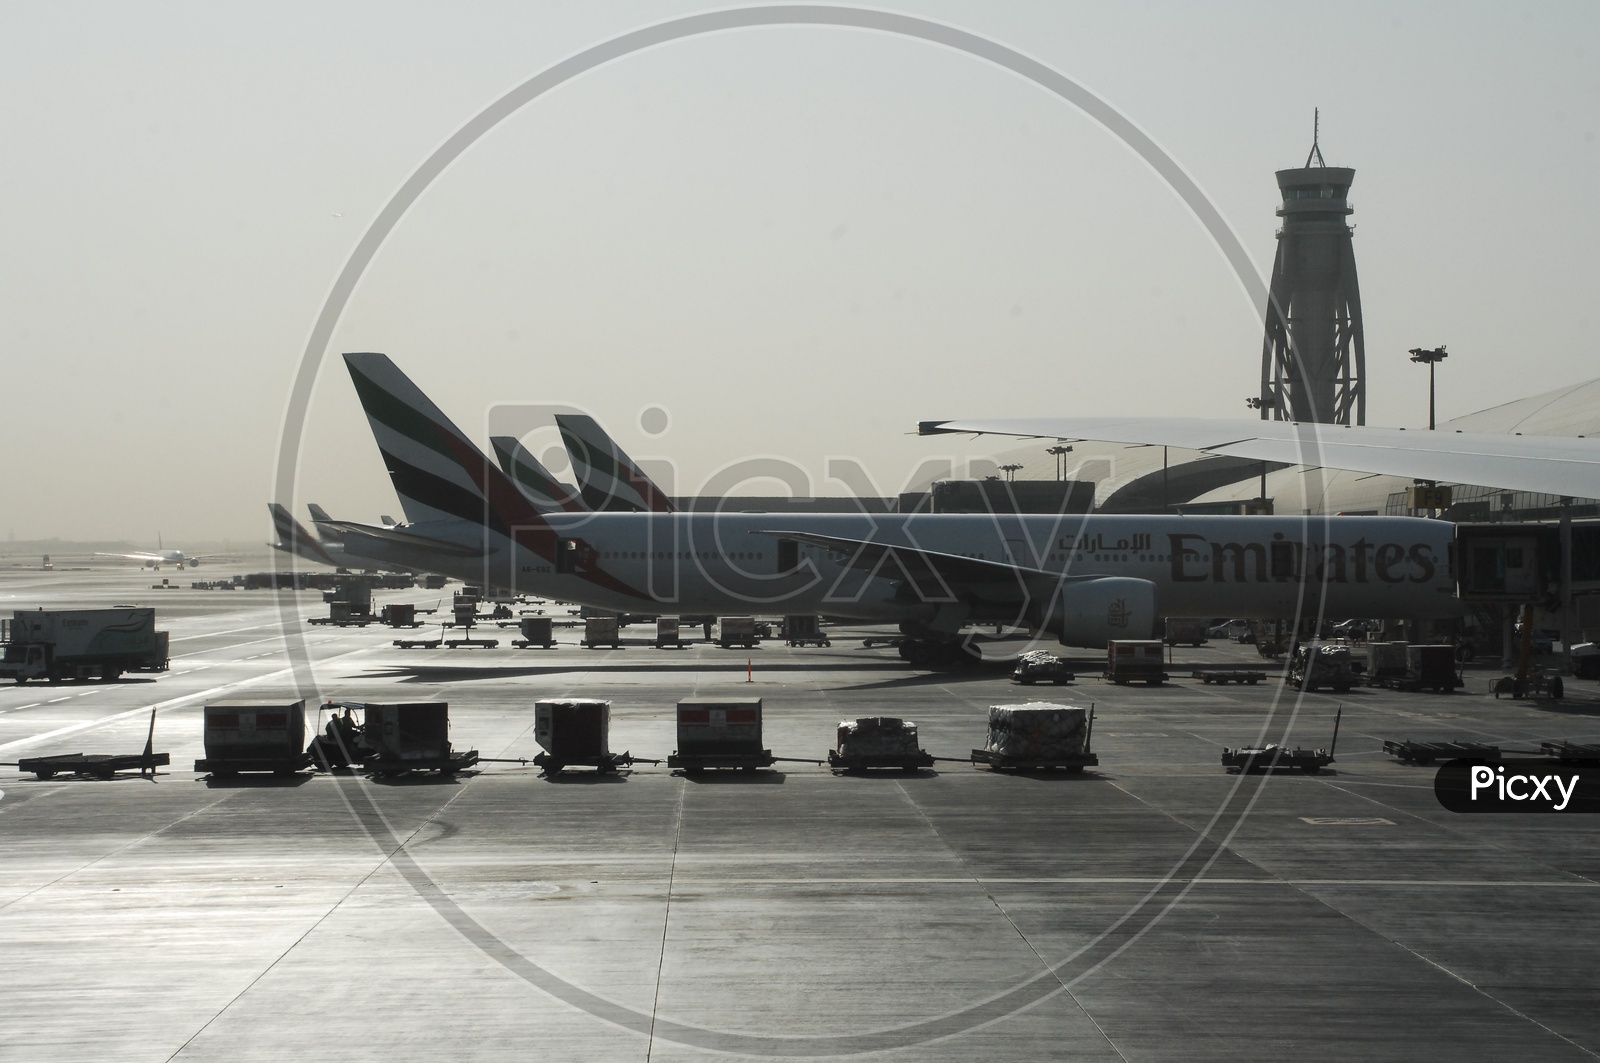 emirates flights waiting on runway